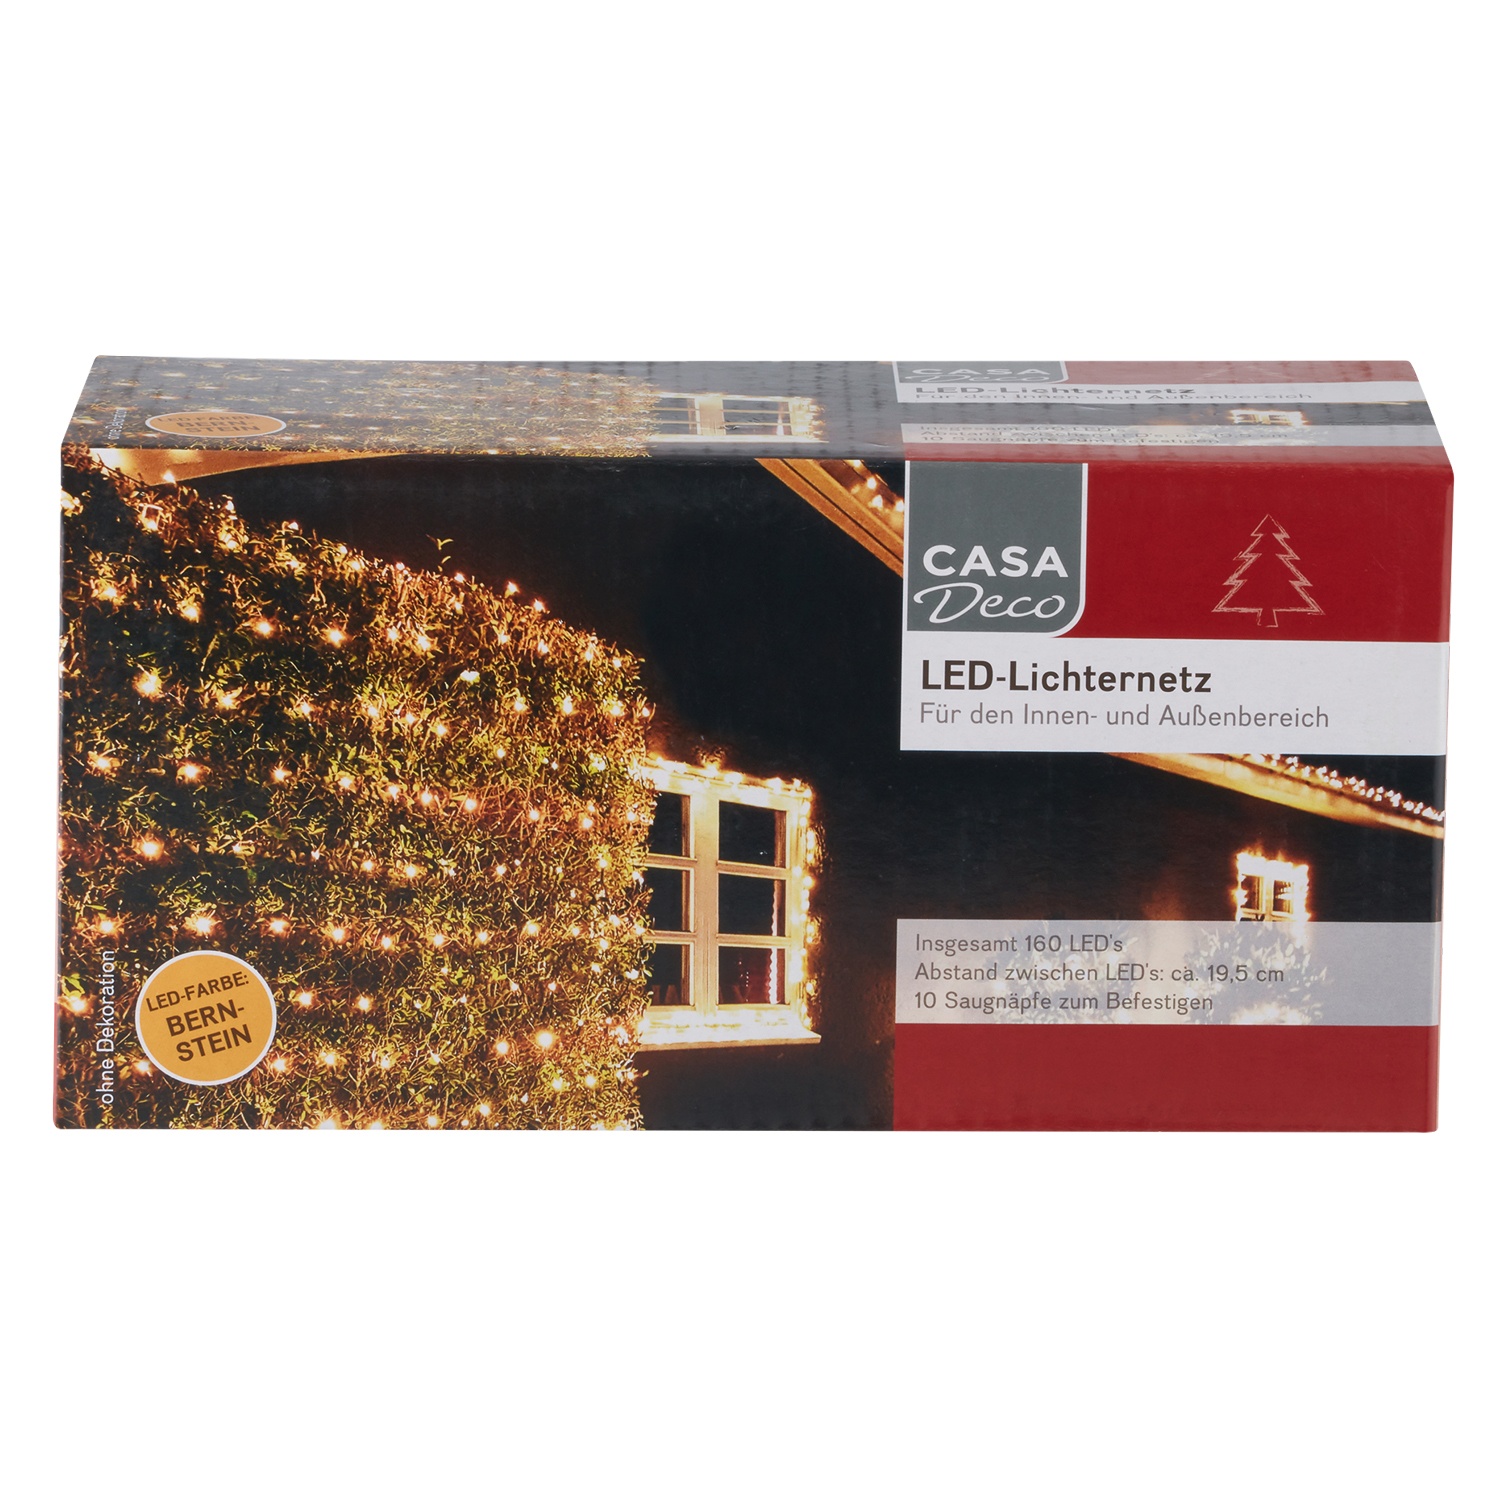 CASA Deco LED-Lichternetz/-vorhang